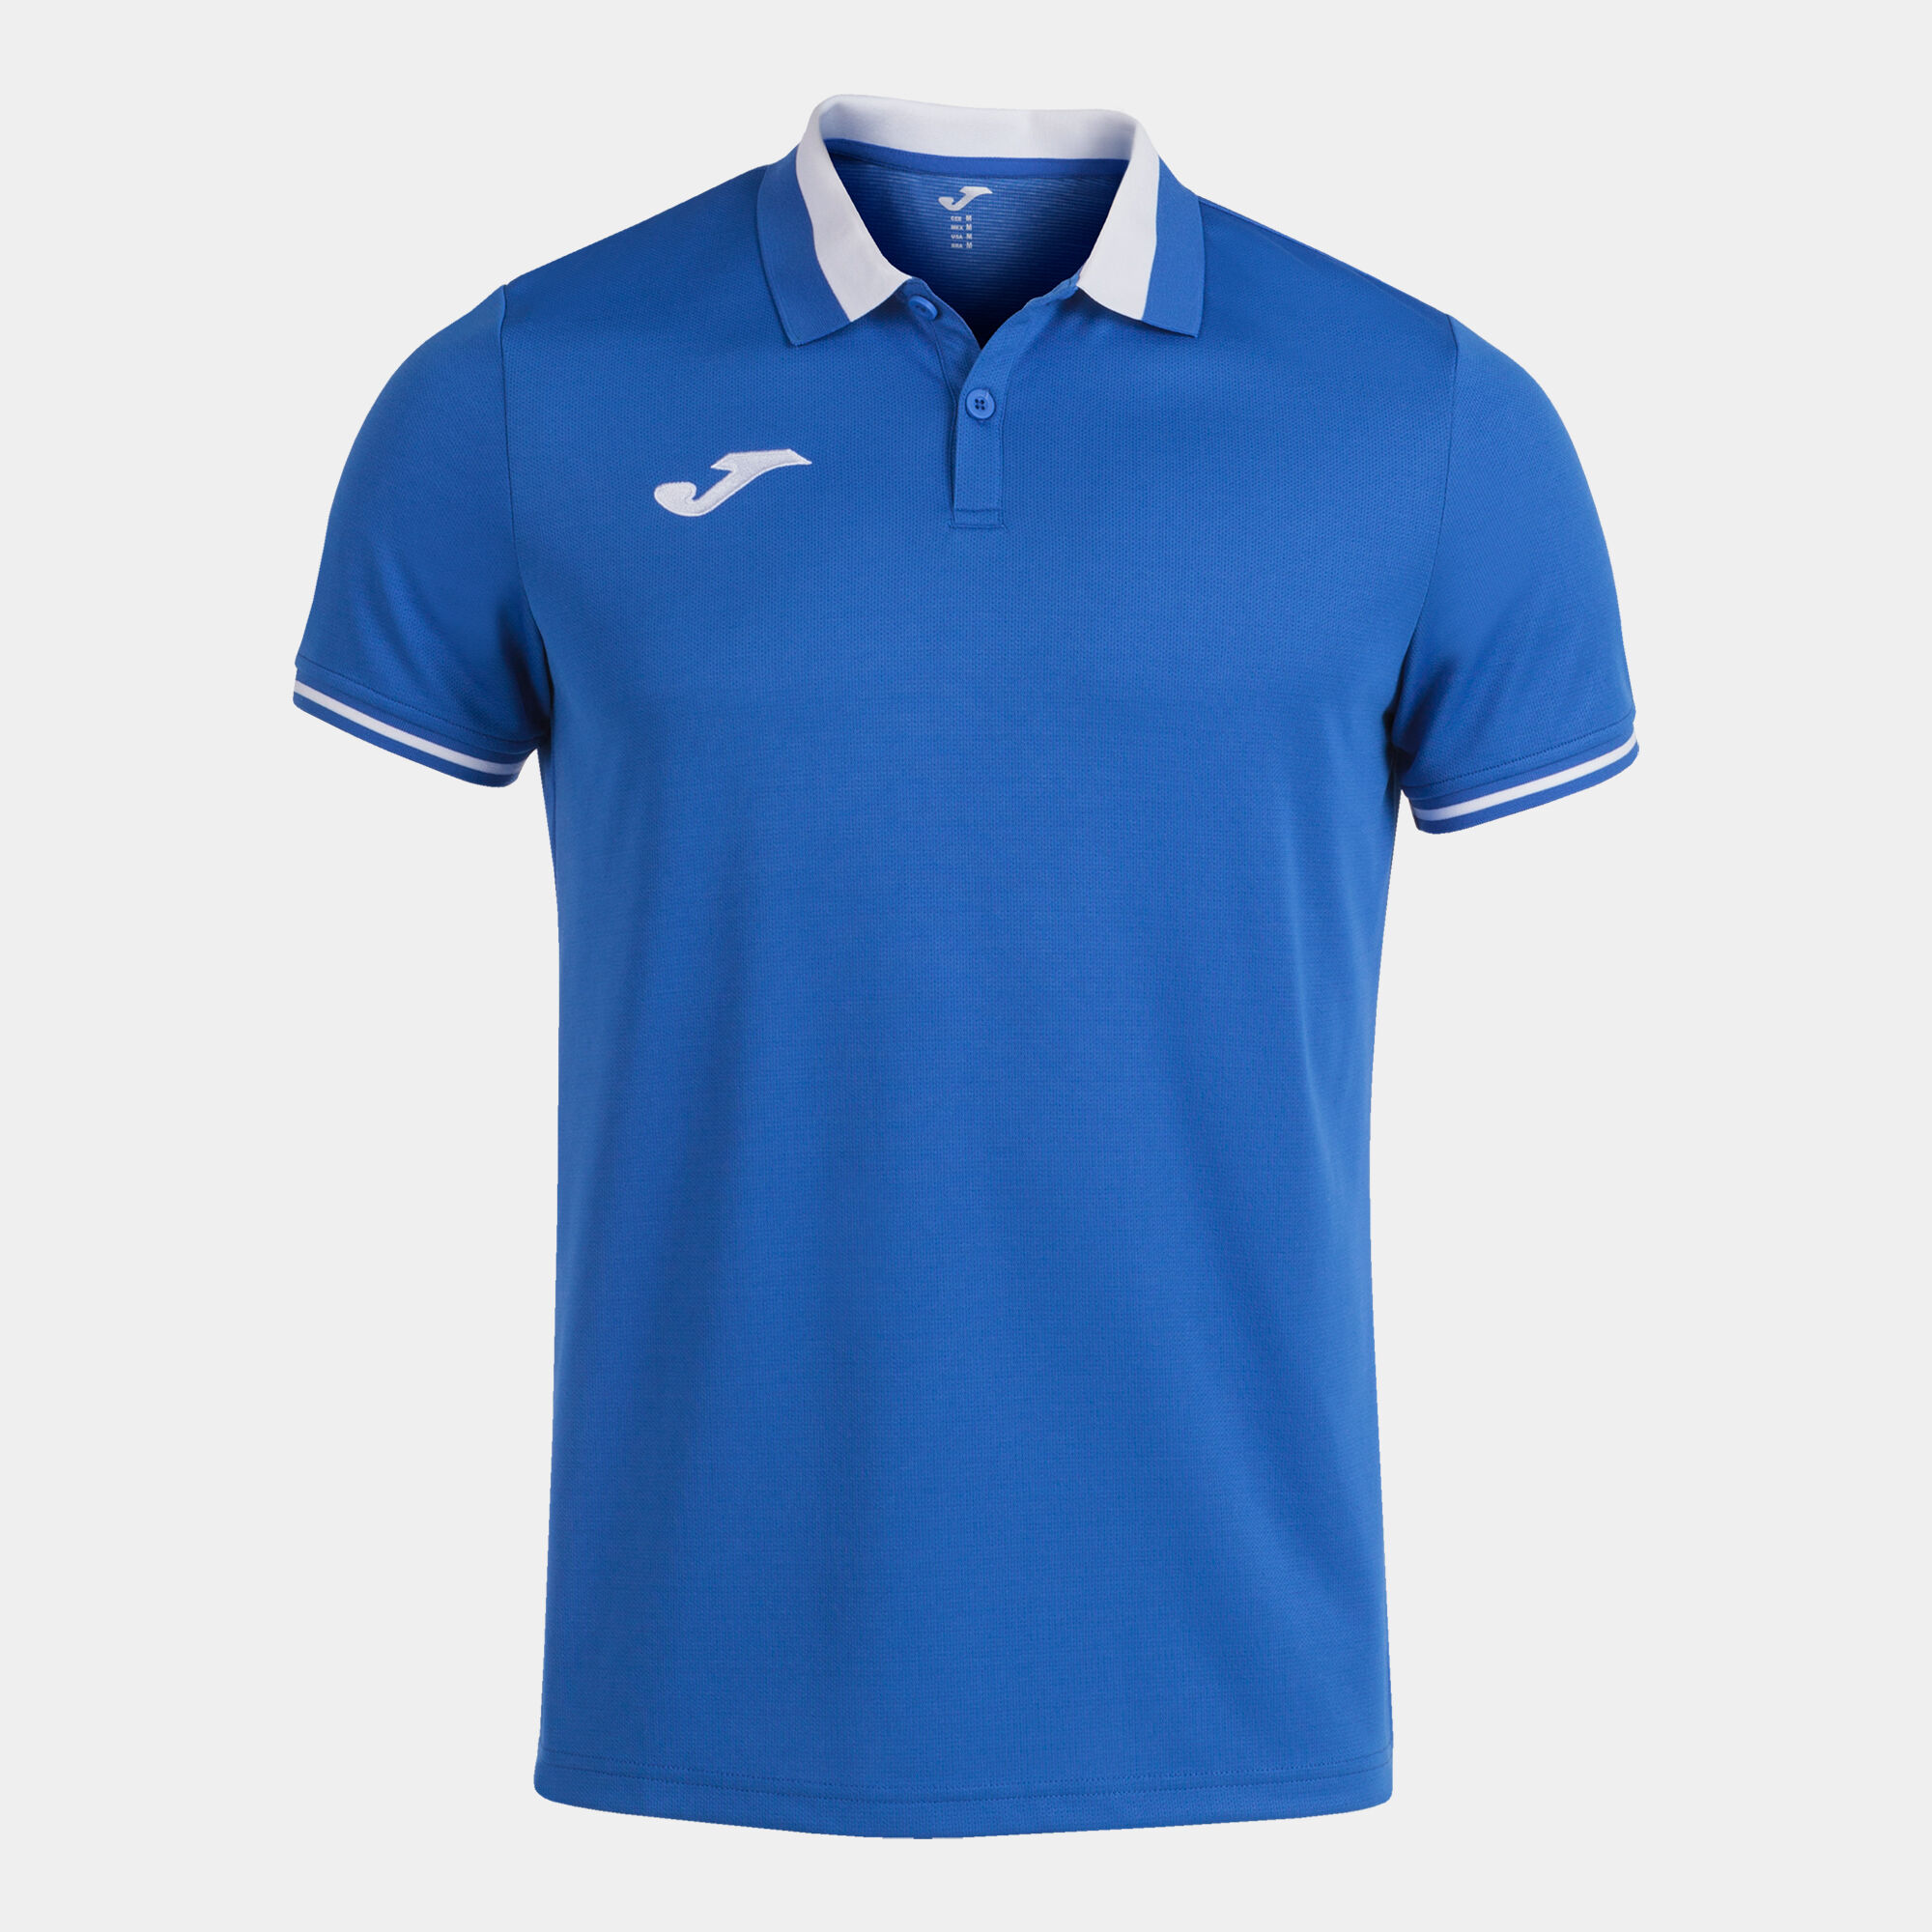 Polo shirt short-sleeve man Championship VI royal blue white